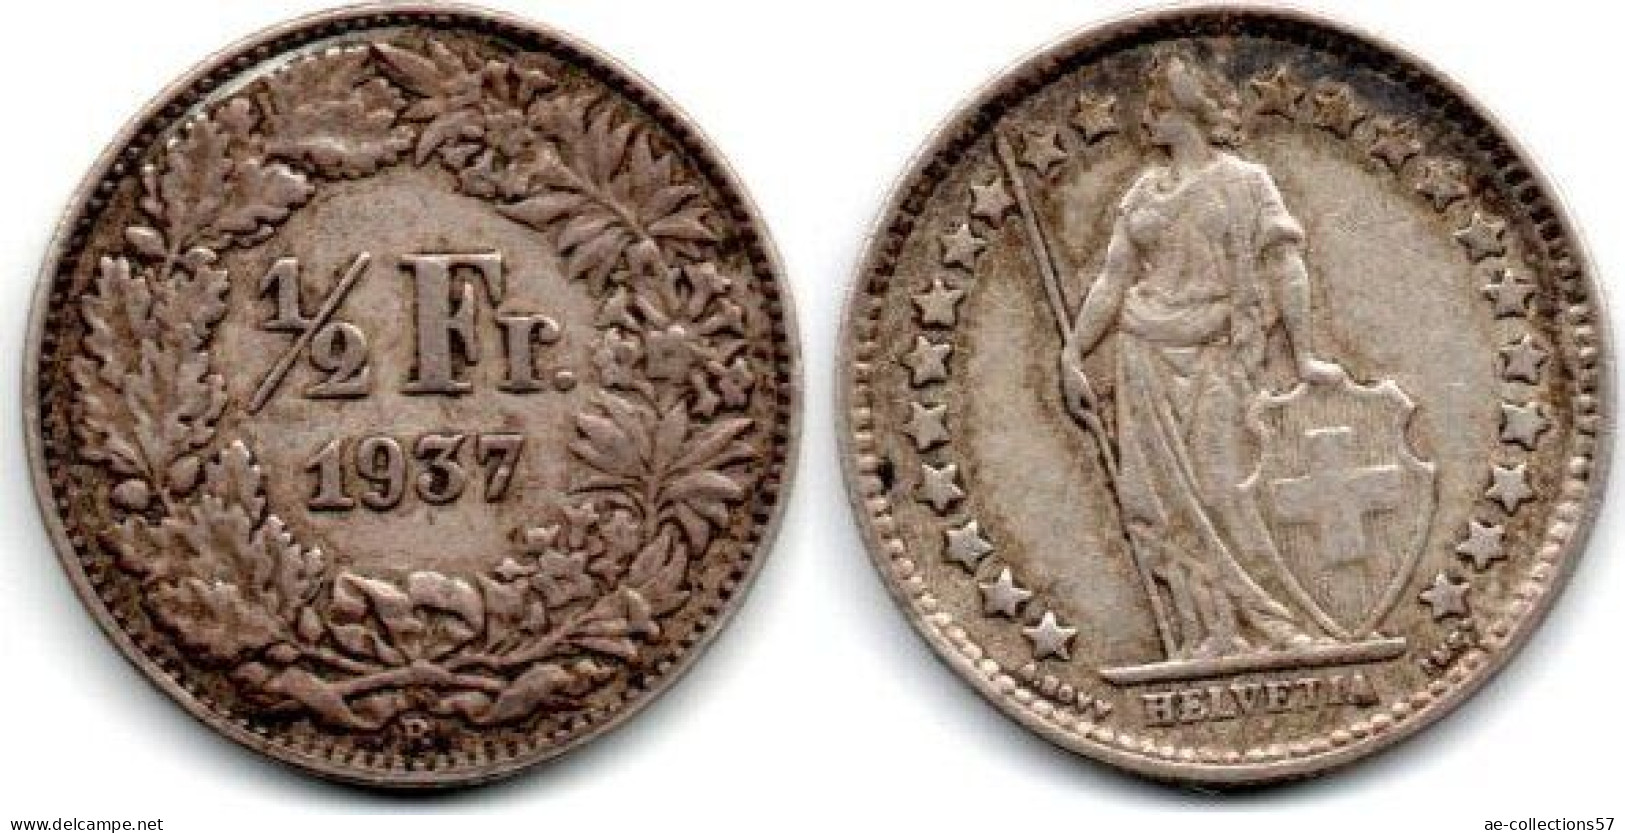 MA 28844 / Suisse - Schweiz - Switzerland 1/2 Franc 1937 B TTB - 1/2 Franc